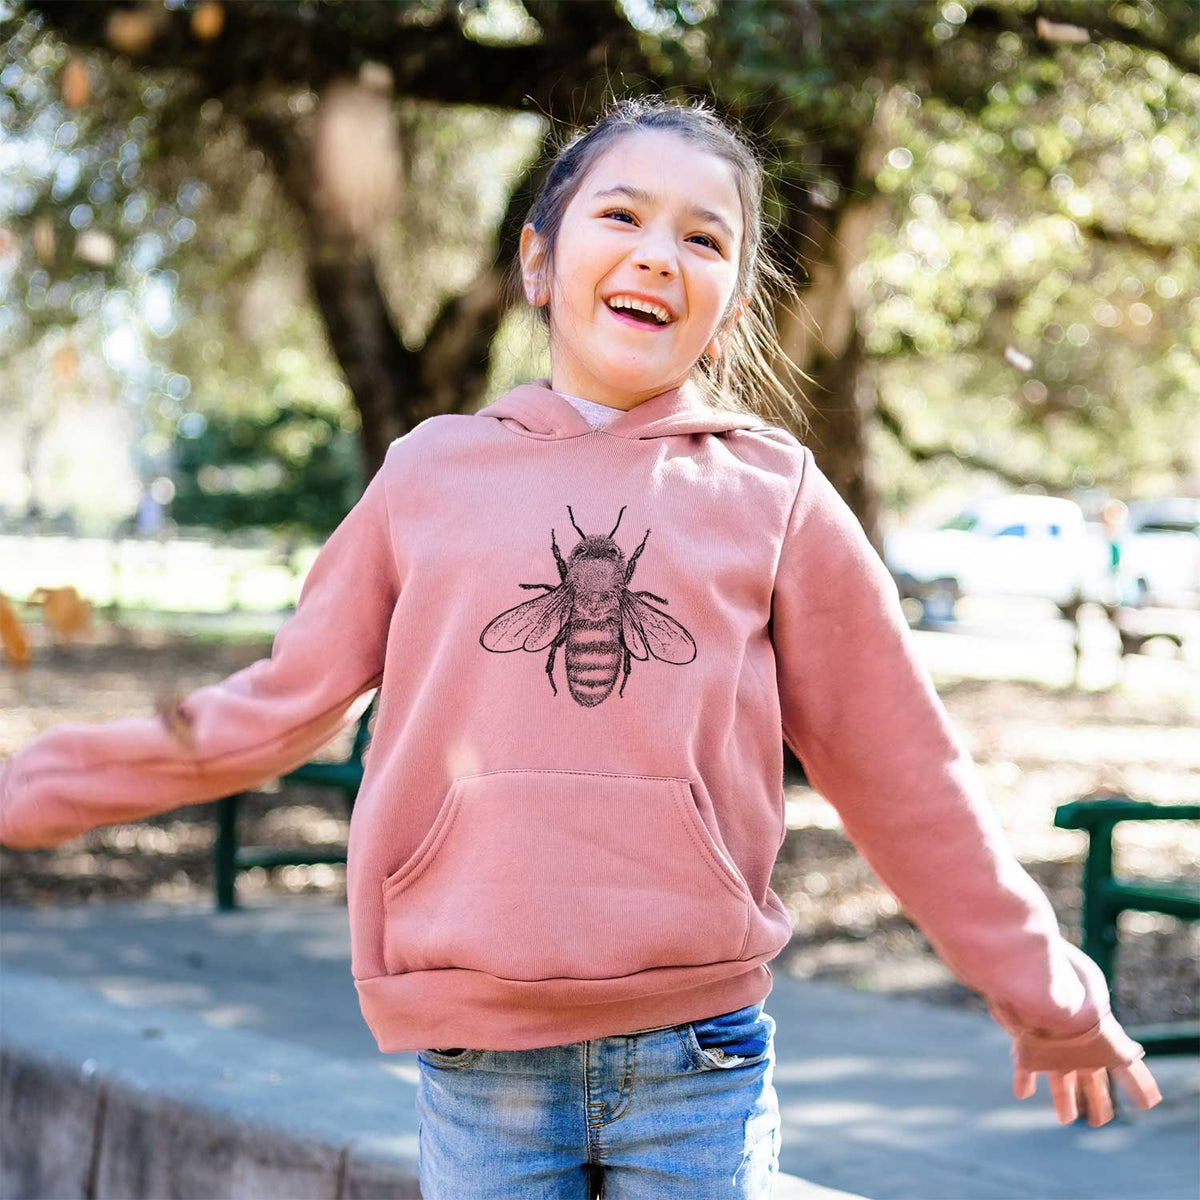 Apis Mellifera - Honey Bee - Youth Hoodie Sweatshirt